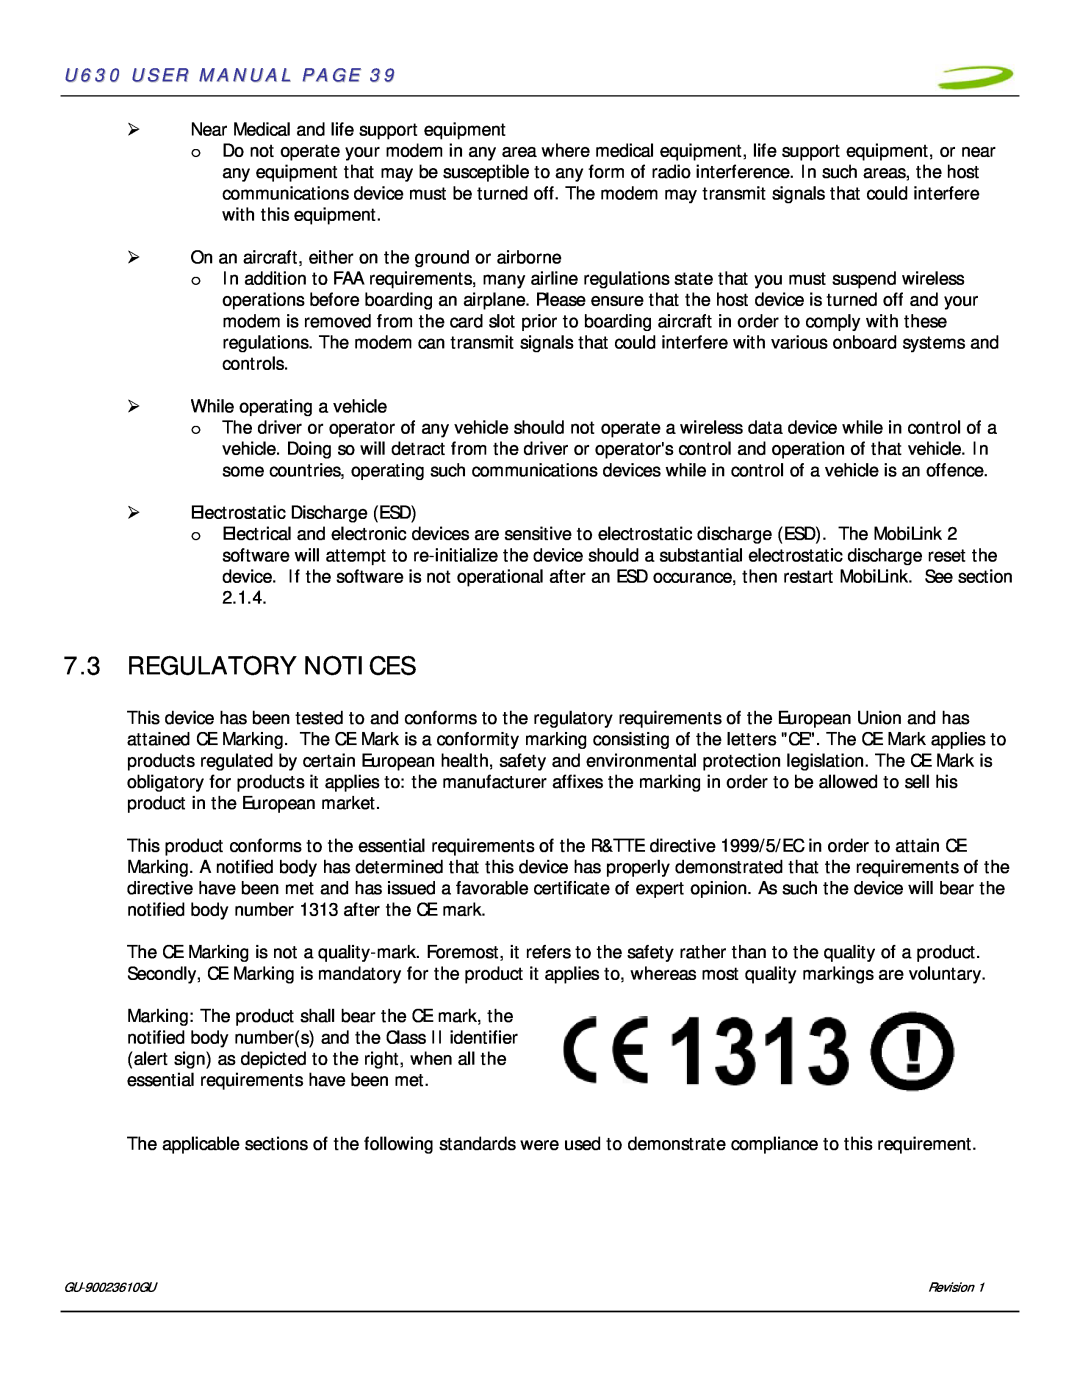 InFocus user manual Regulatory Notices, U630 USER MANUAL PAGE 